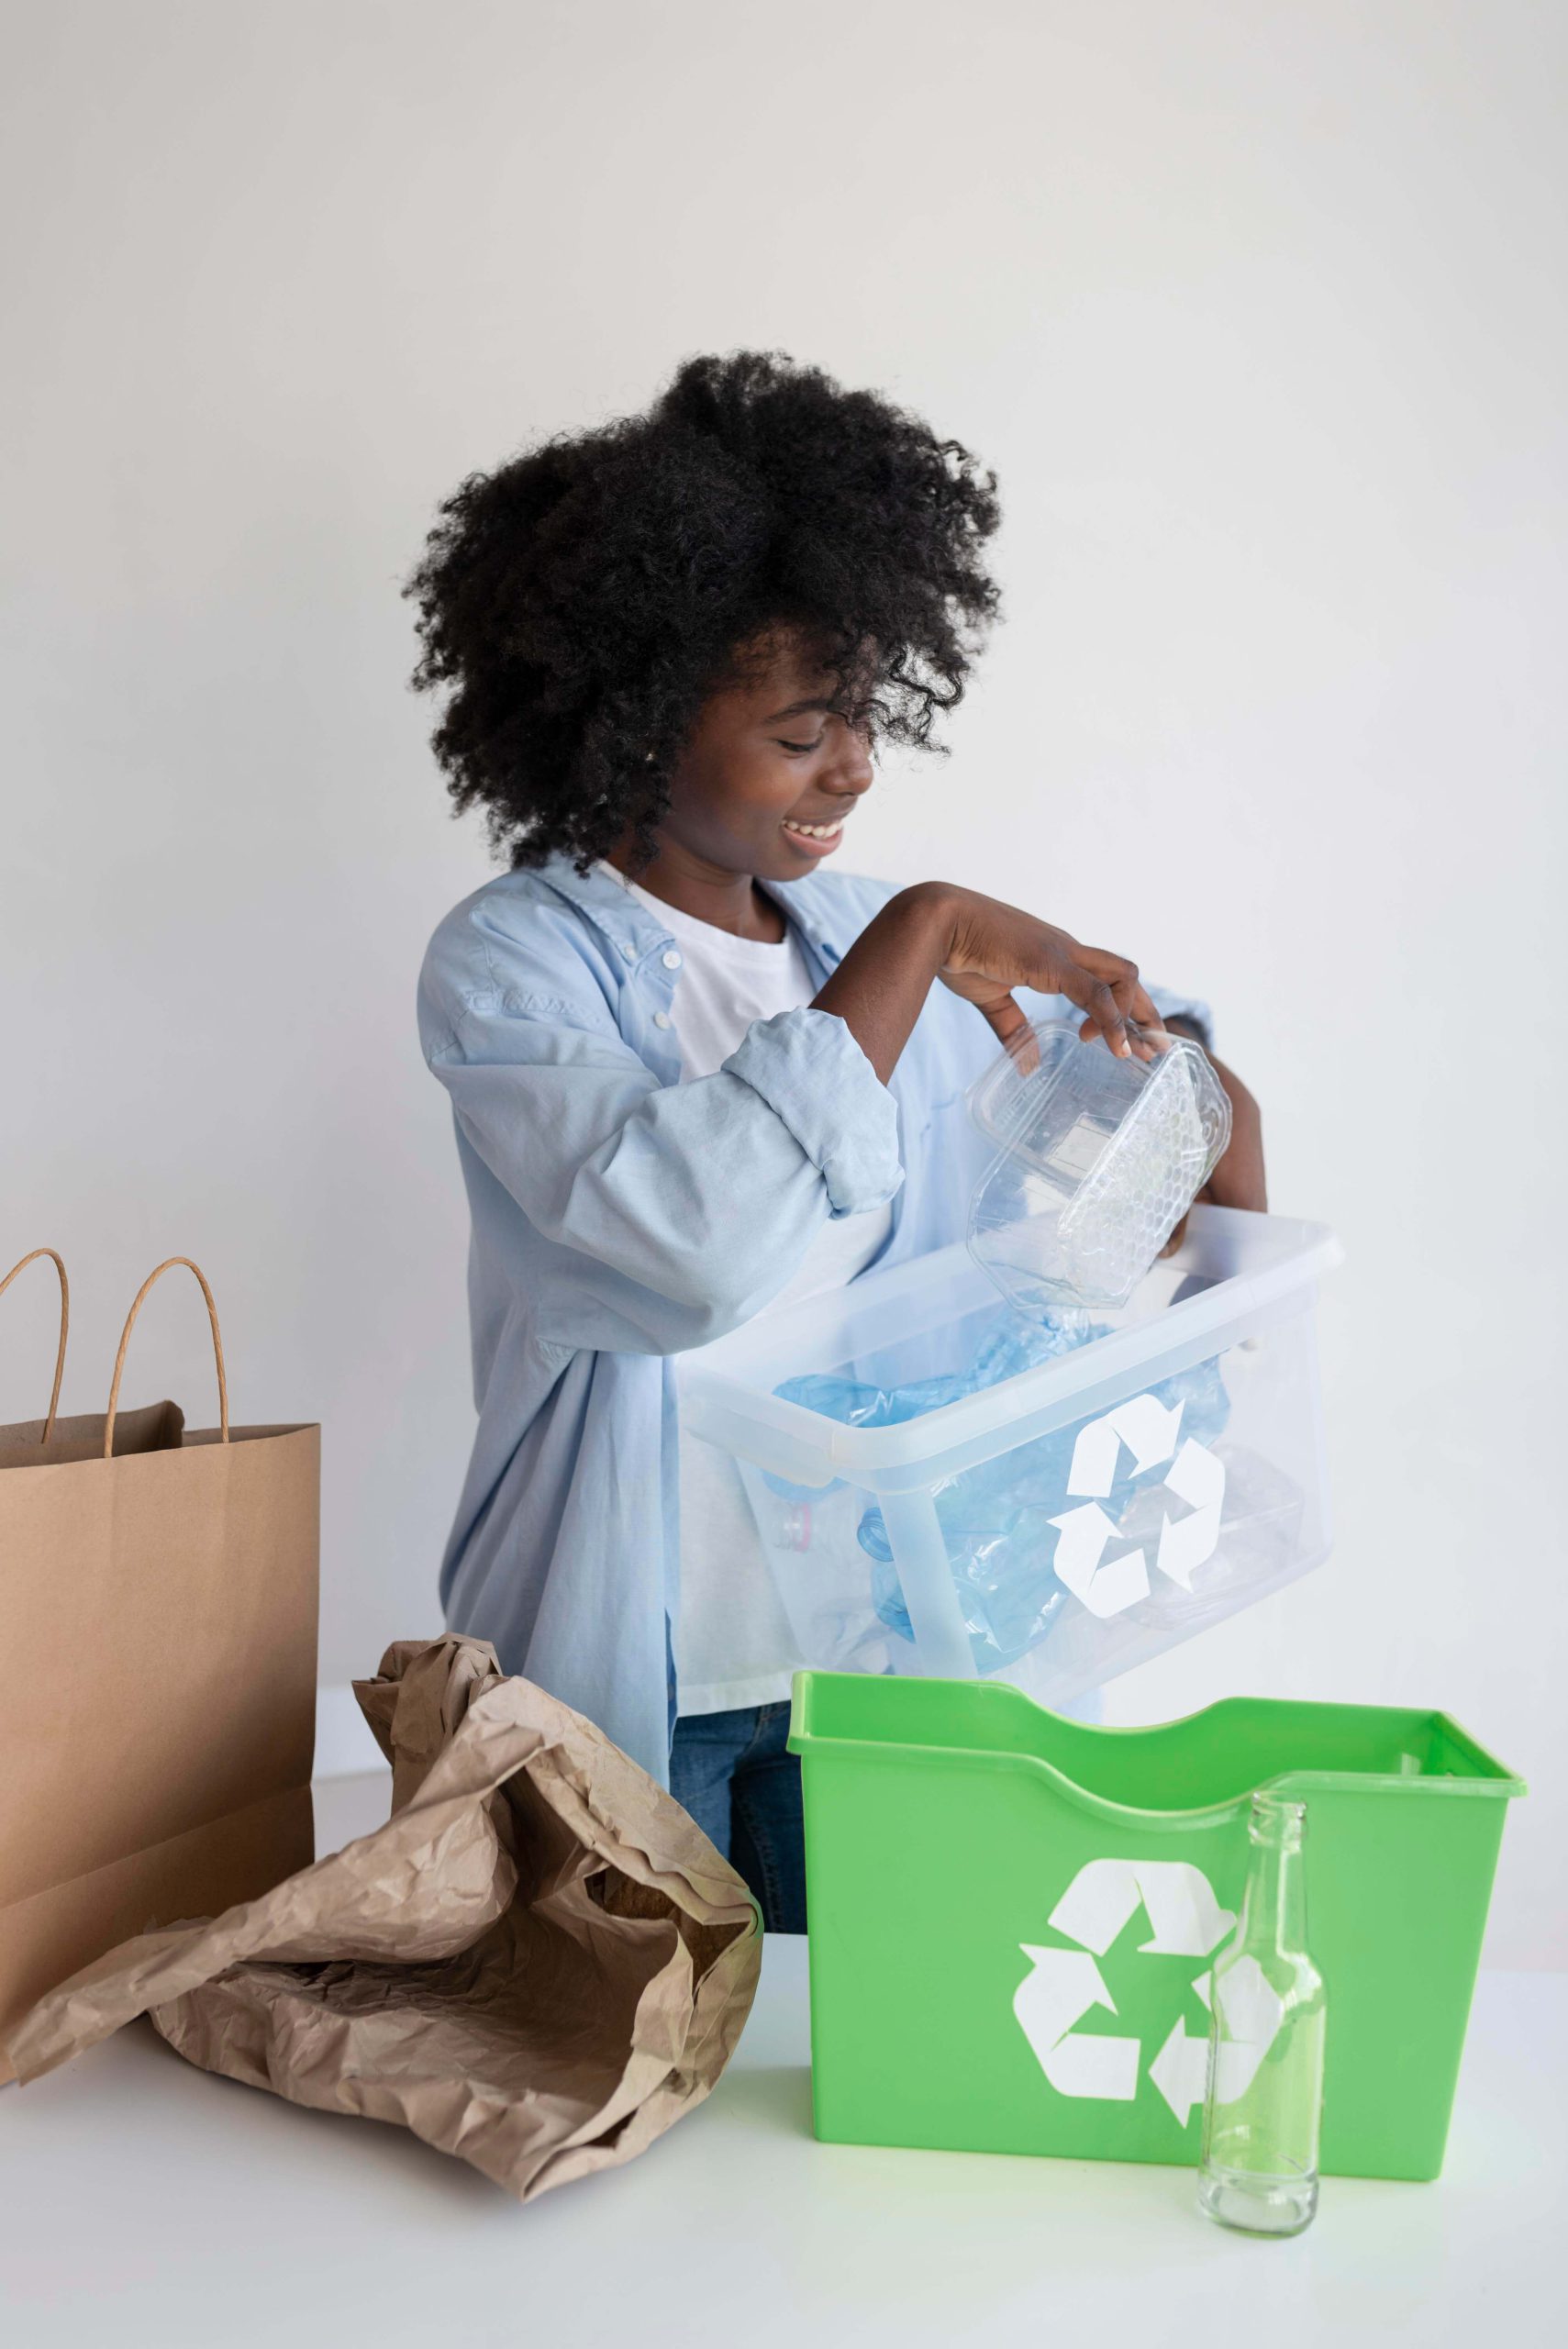 woman-recycling-better-environment